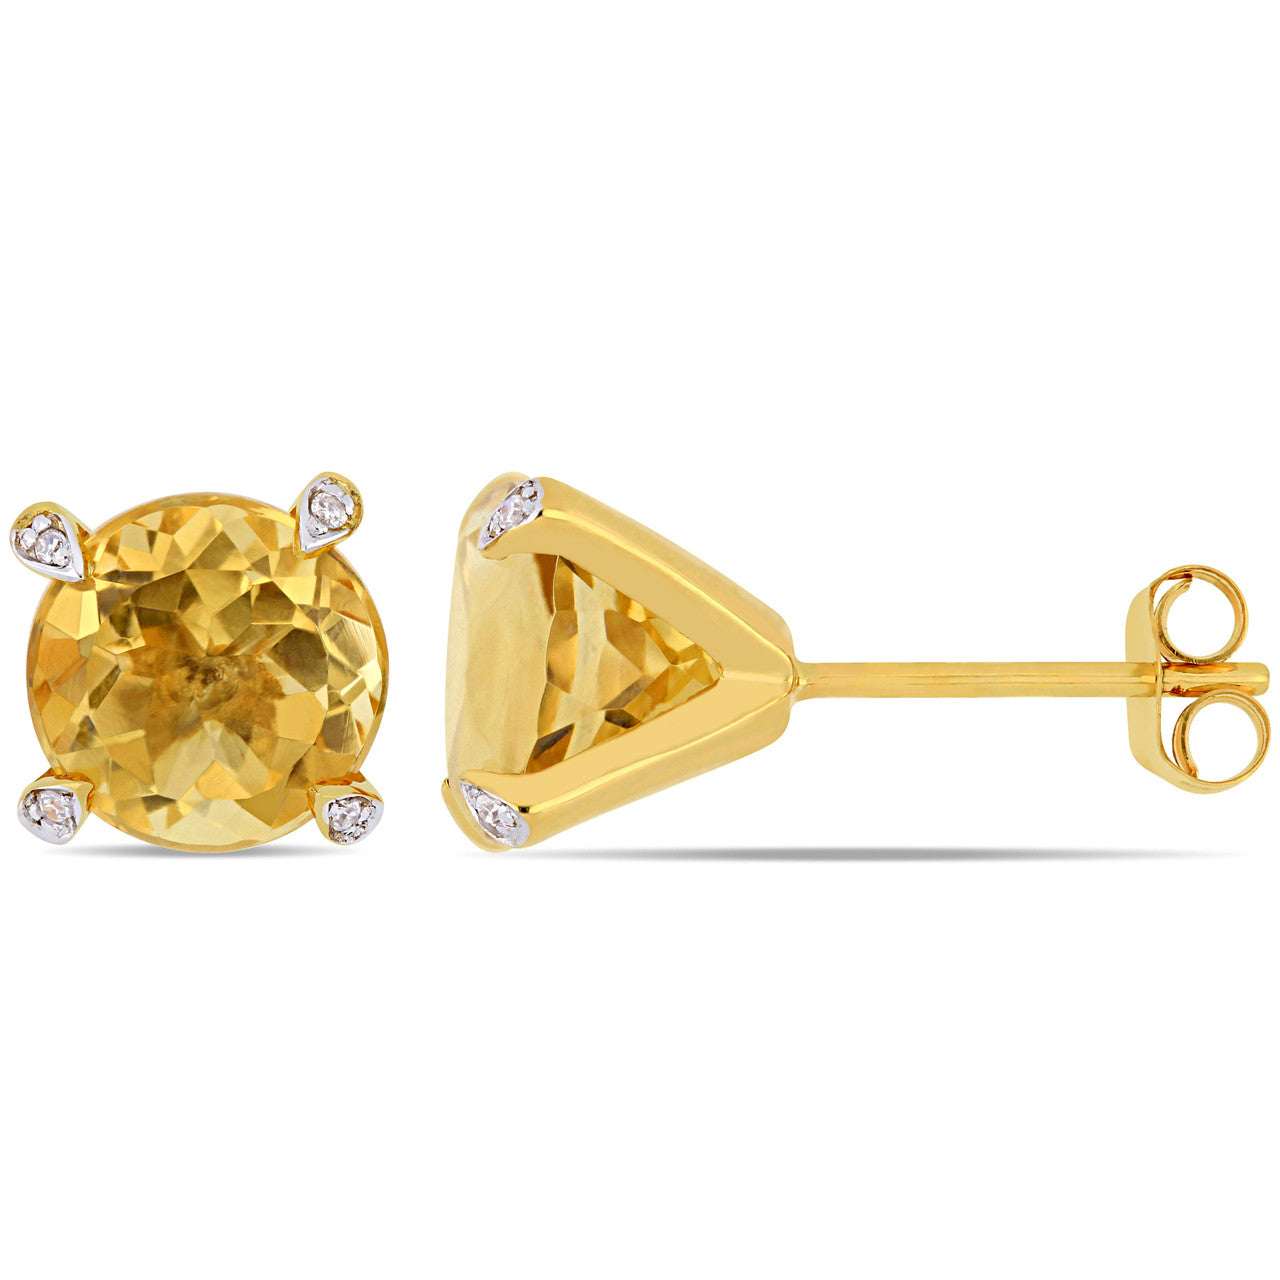 Ice Jewellery 3 5/8 CT Citrine And 1/10 CT Diamond Martini Stud Earrings In 10K Yellow Gold - 75000005998 | Ice Jewellery Australia